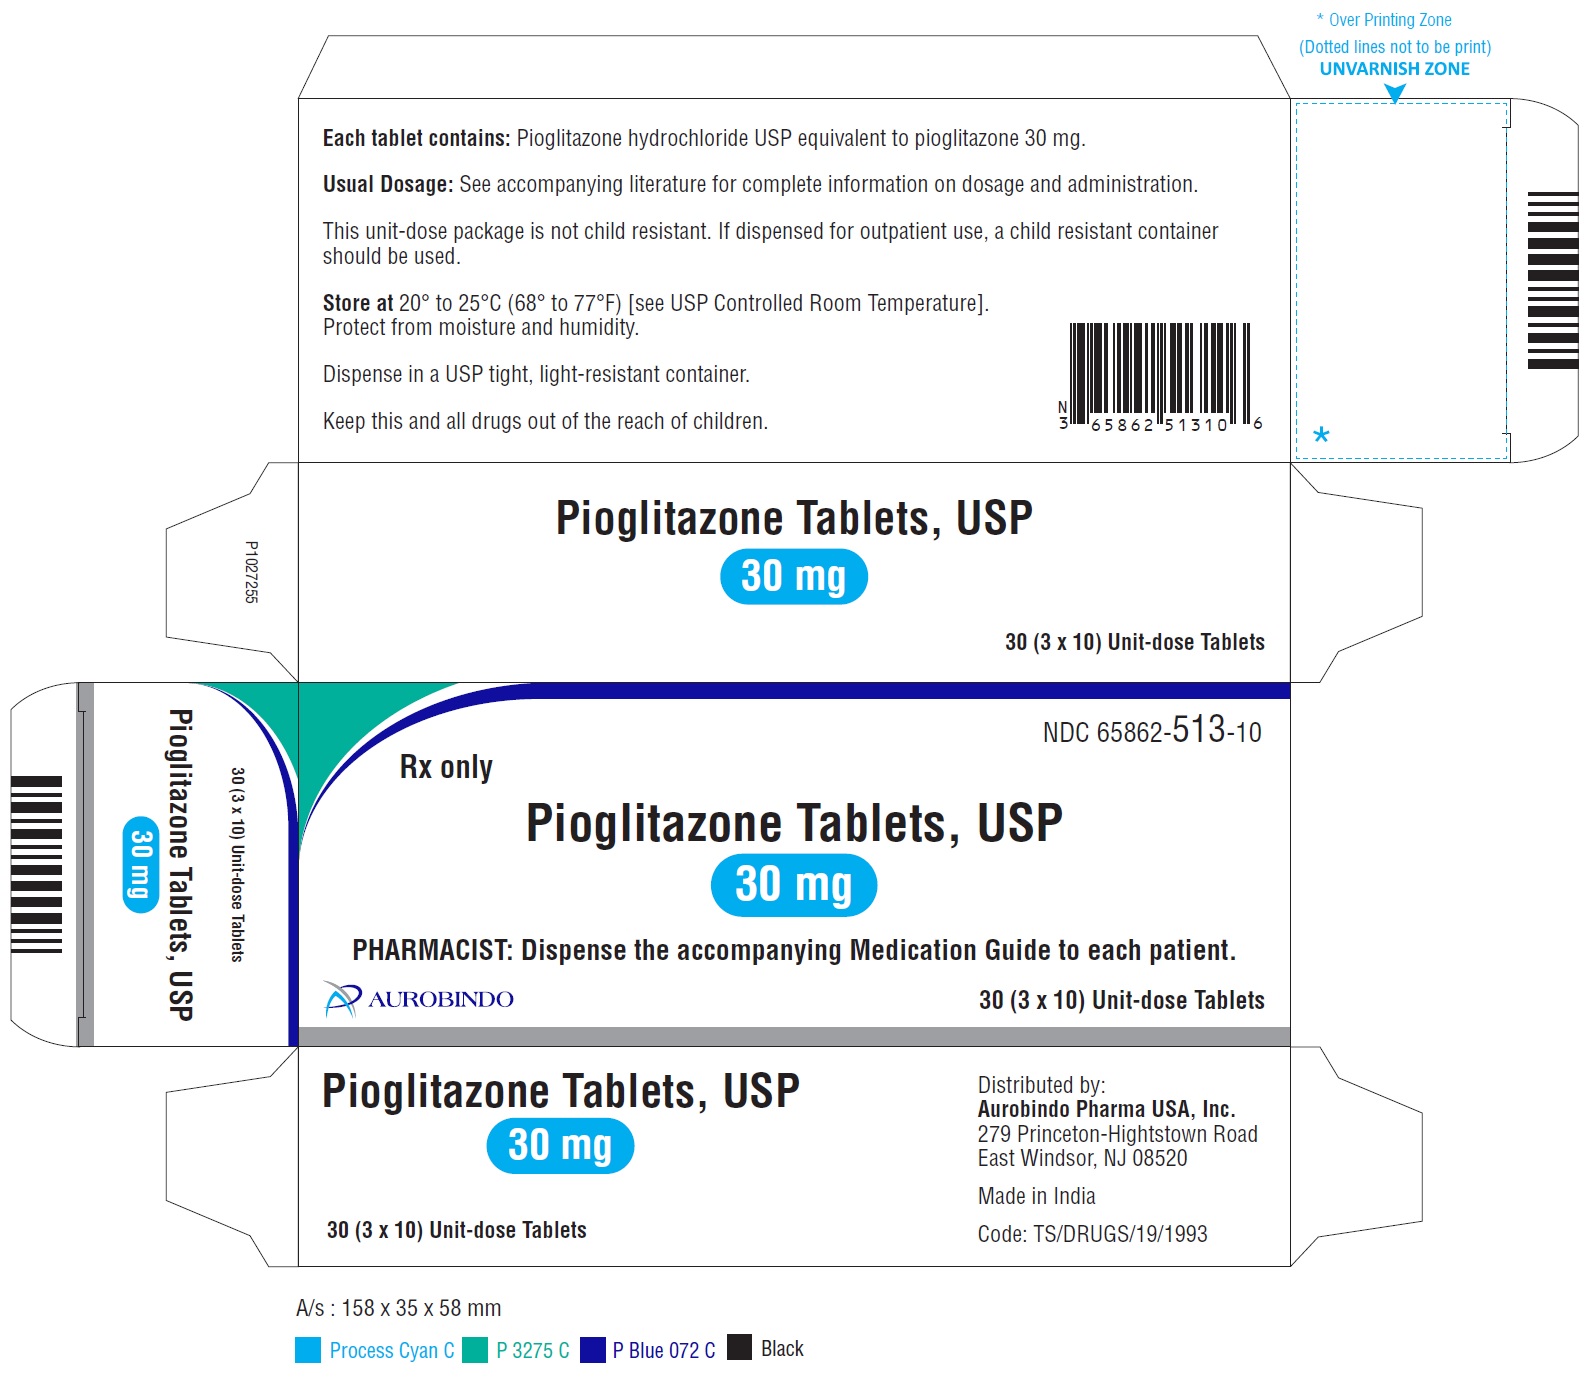 PACKAGE LABEL-PRINCIPAL DISPLAY PANEL - 30 mg Blister Carton (3 x 10 Unit-dose)